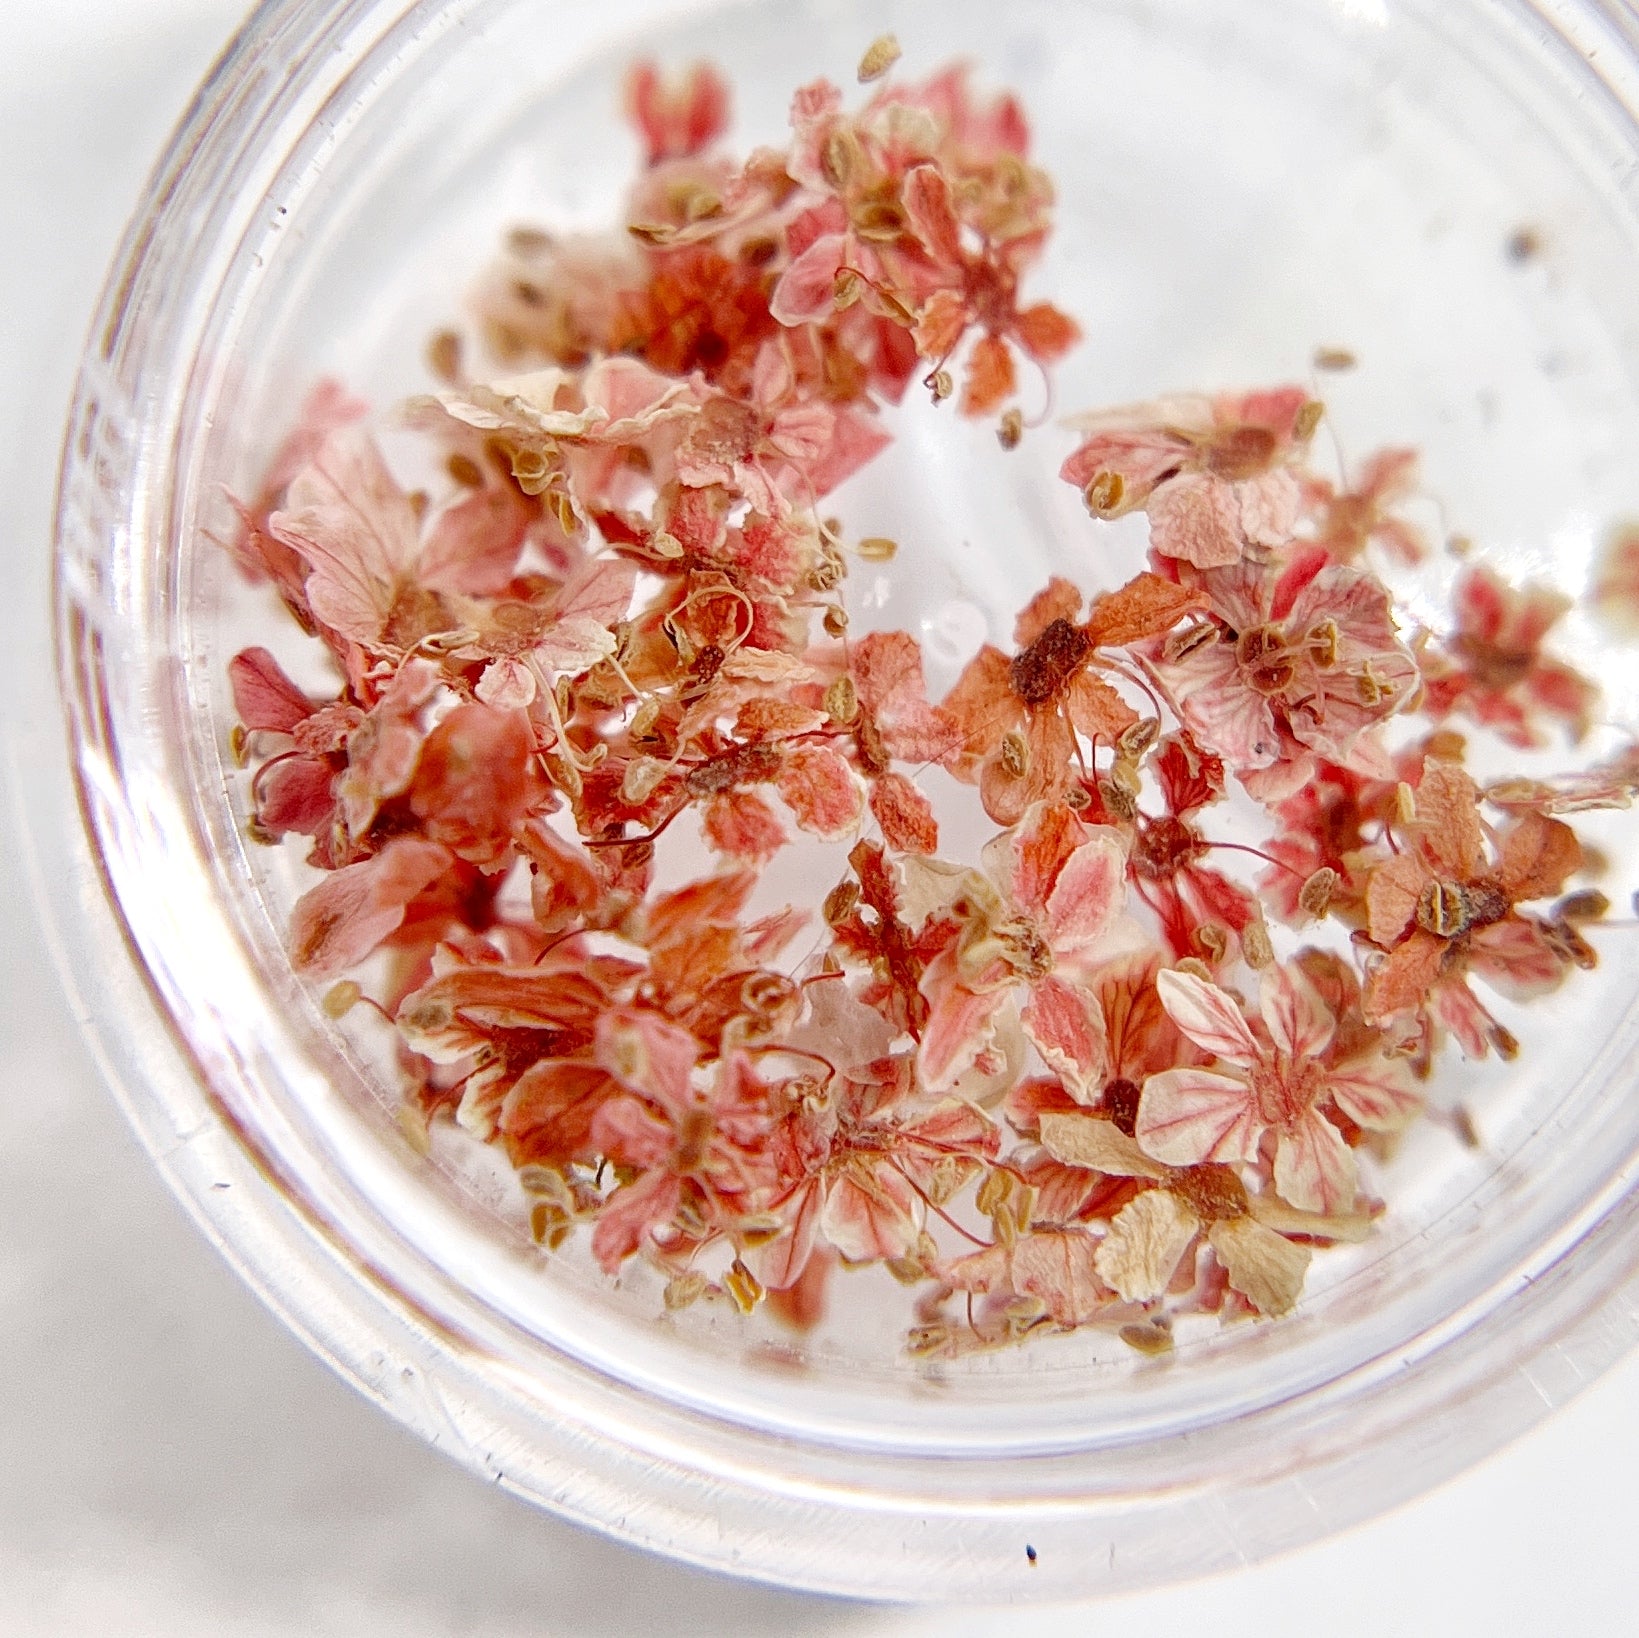 Petite Bloom in Cerise - Multi-Tonal Red-Orange Pressed Flower Mix in Jar, Presented on White Background.